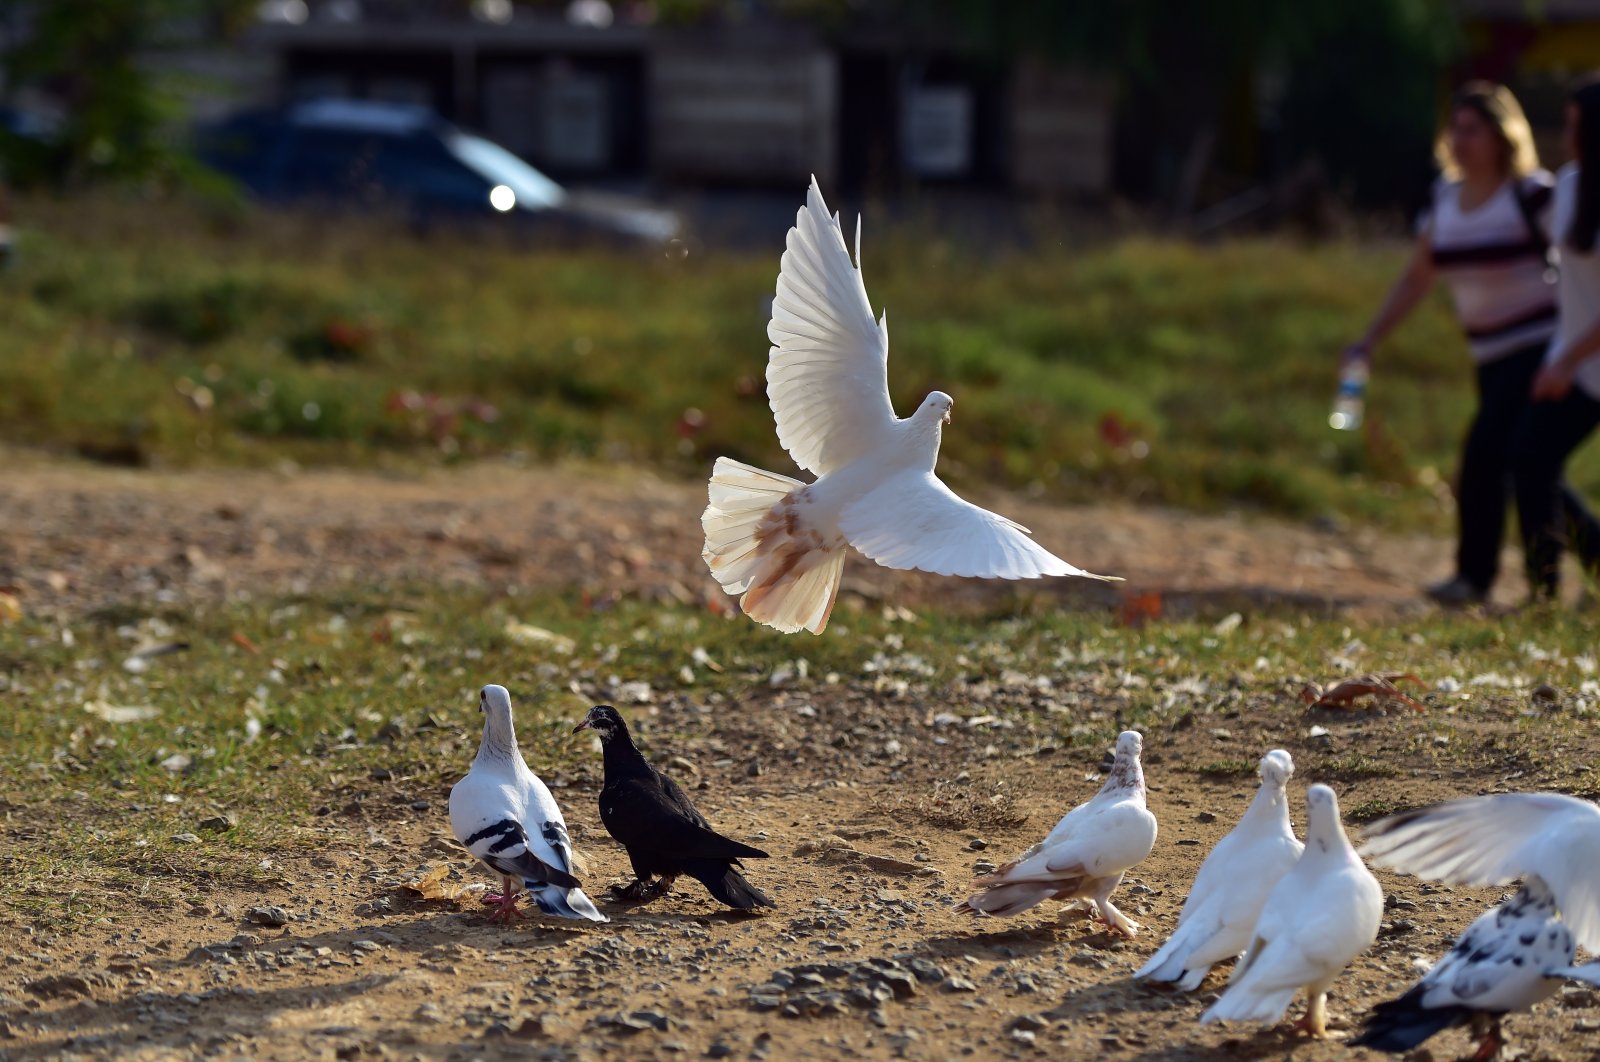 Pigeons flying around in this undated photo. (Photo by İlhami Yıldırım)